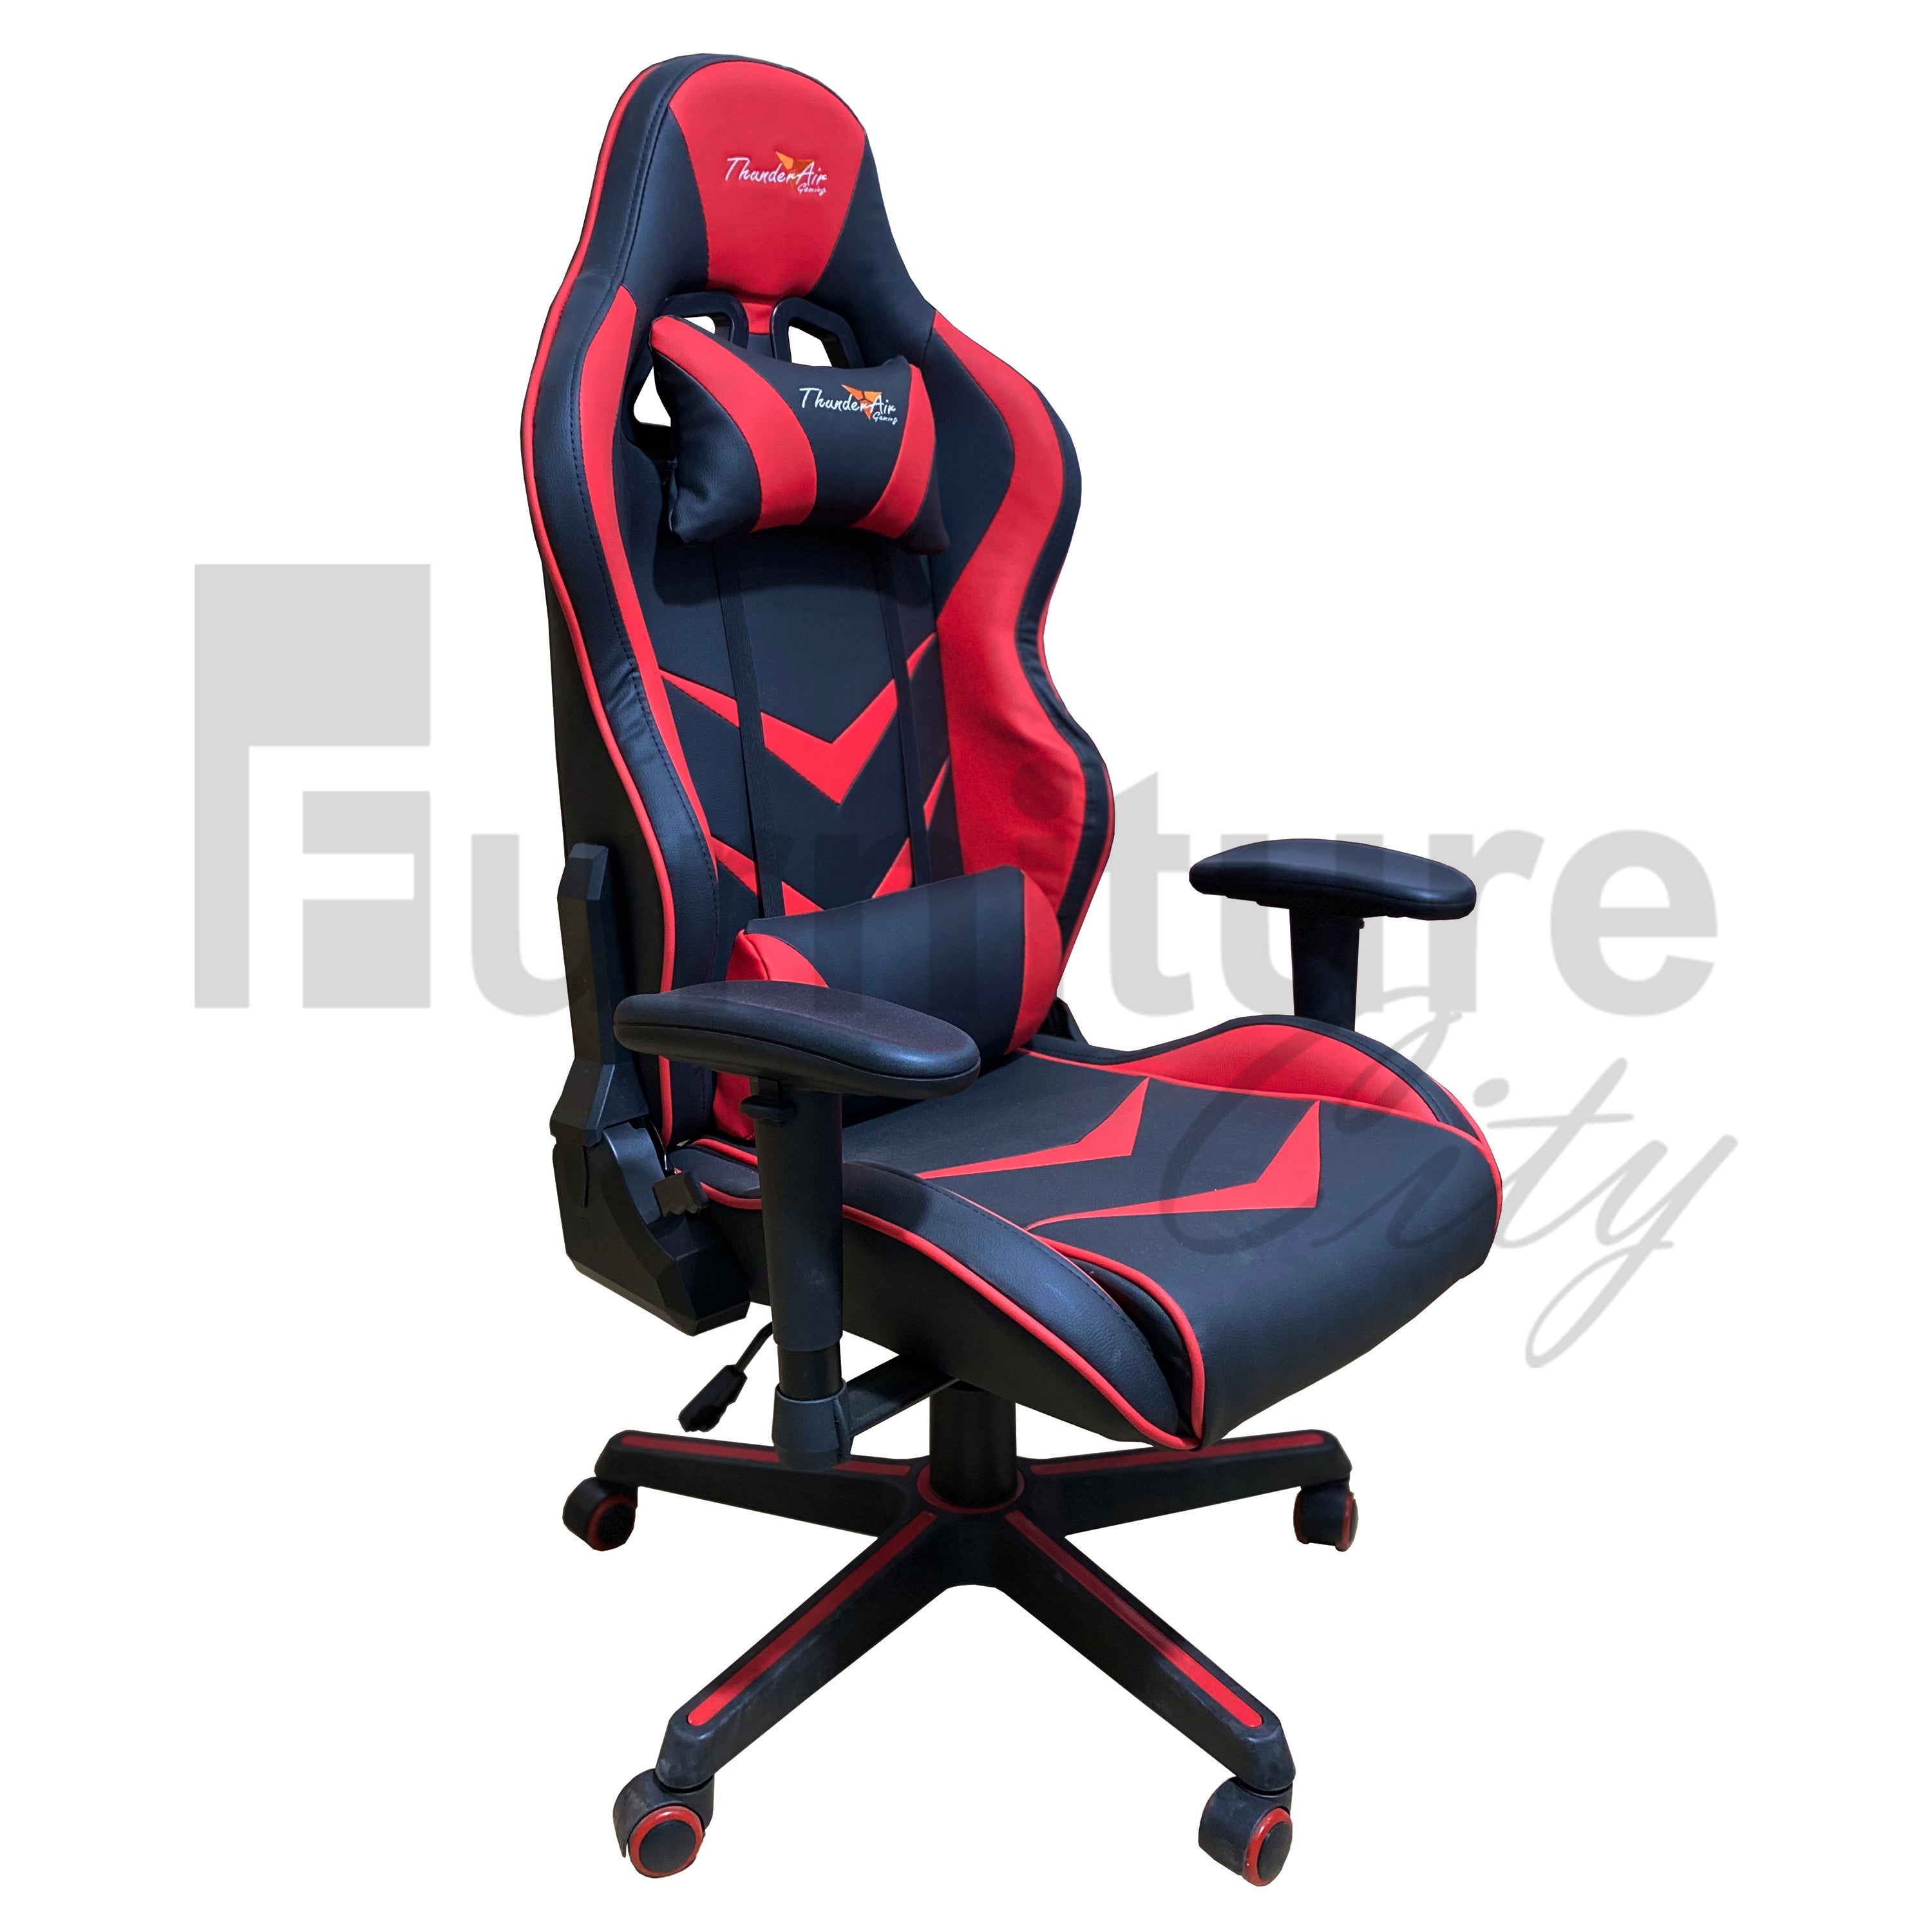 Thunder Air Gaming Chair - Red